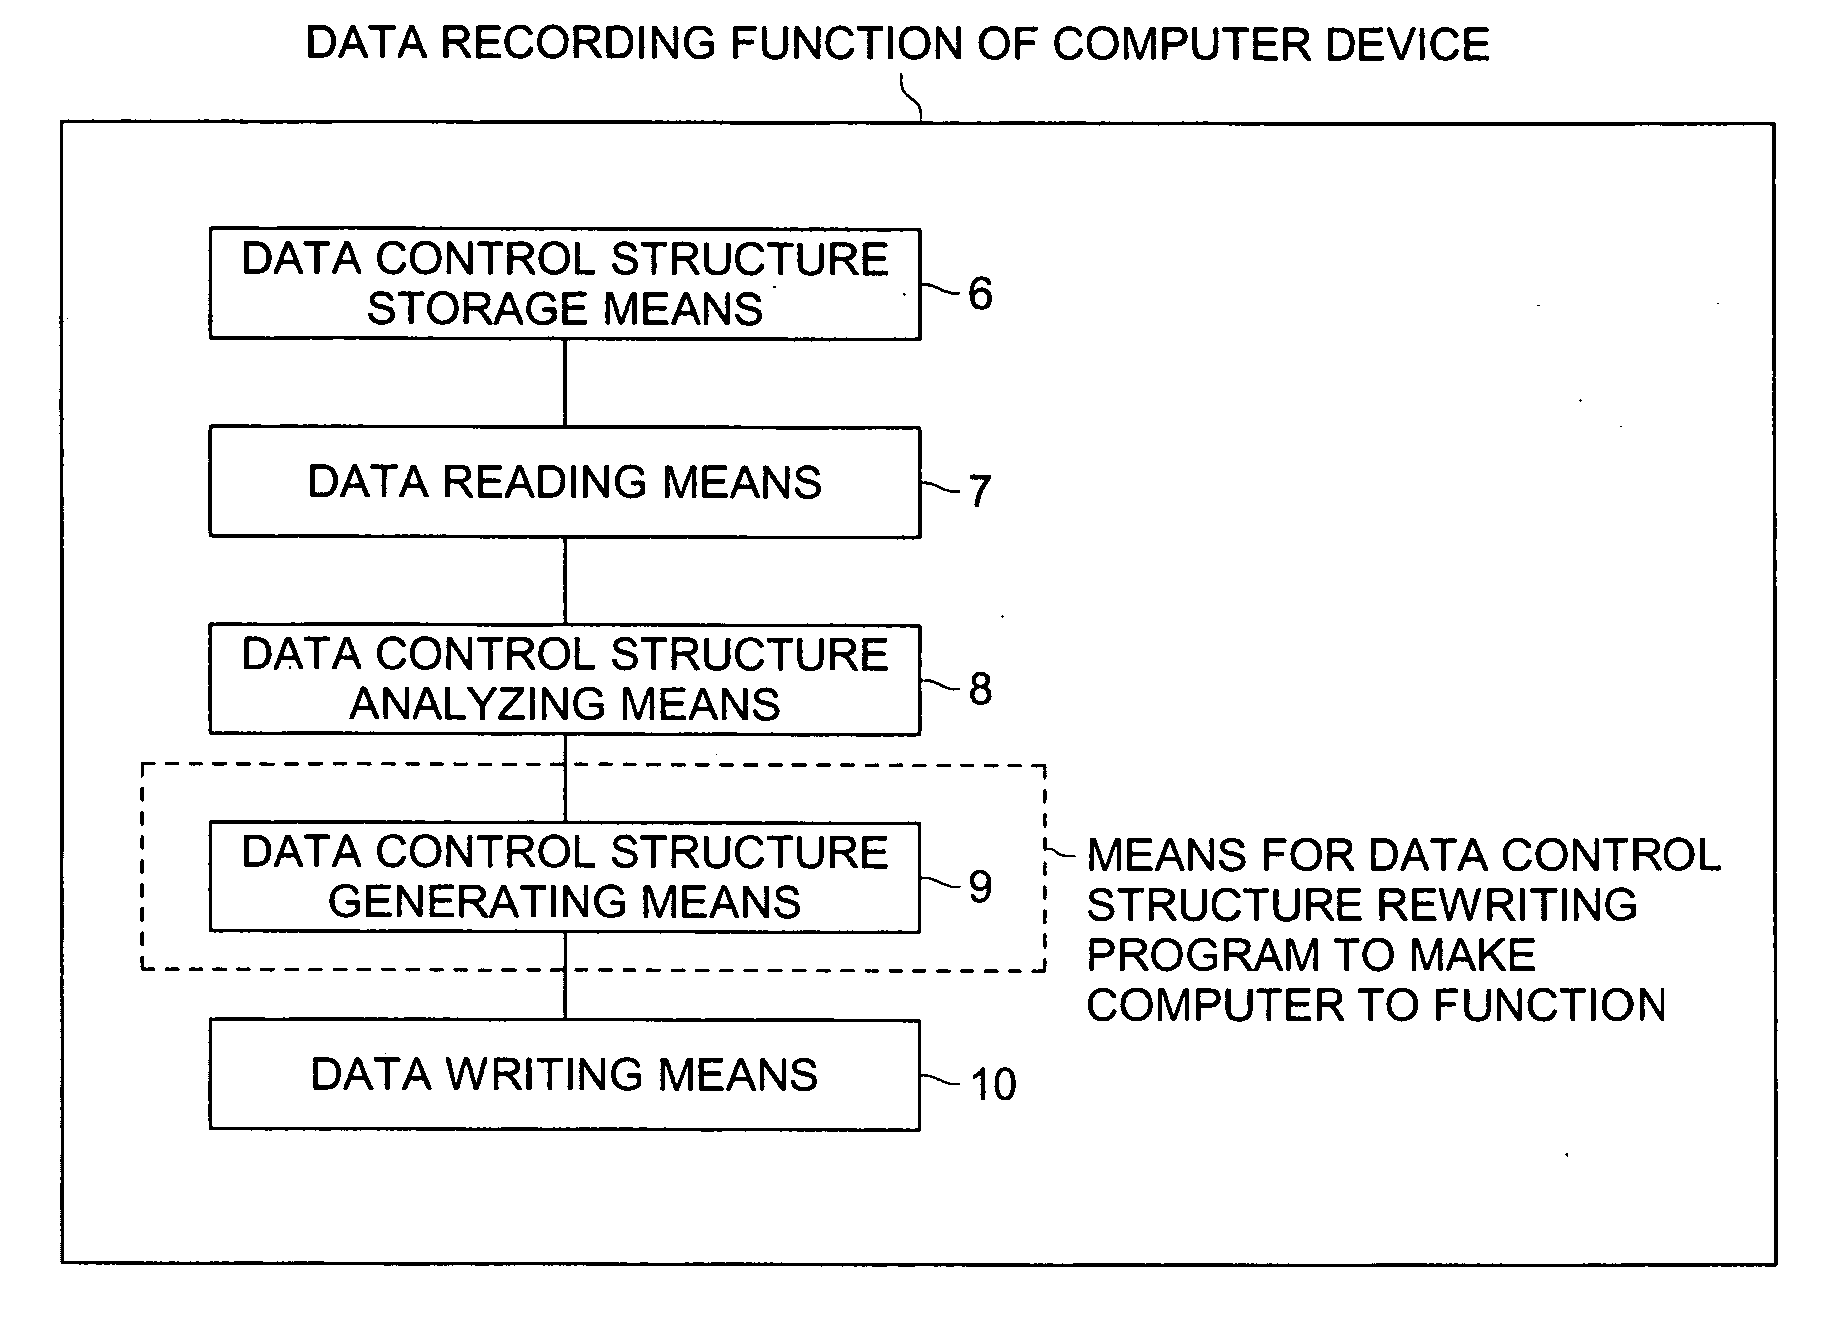 Data control structure rewriting program